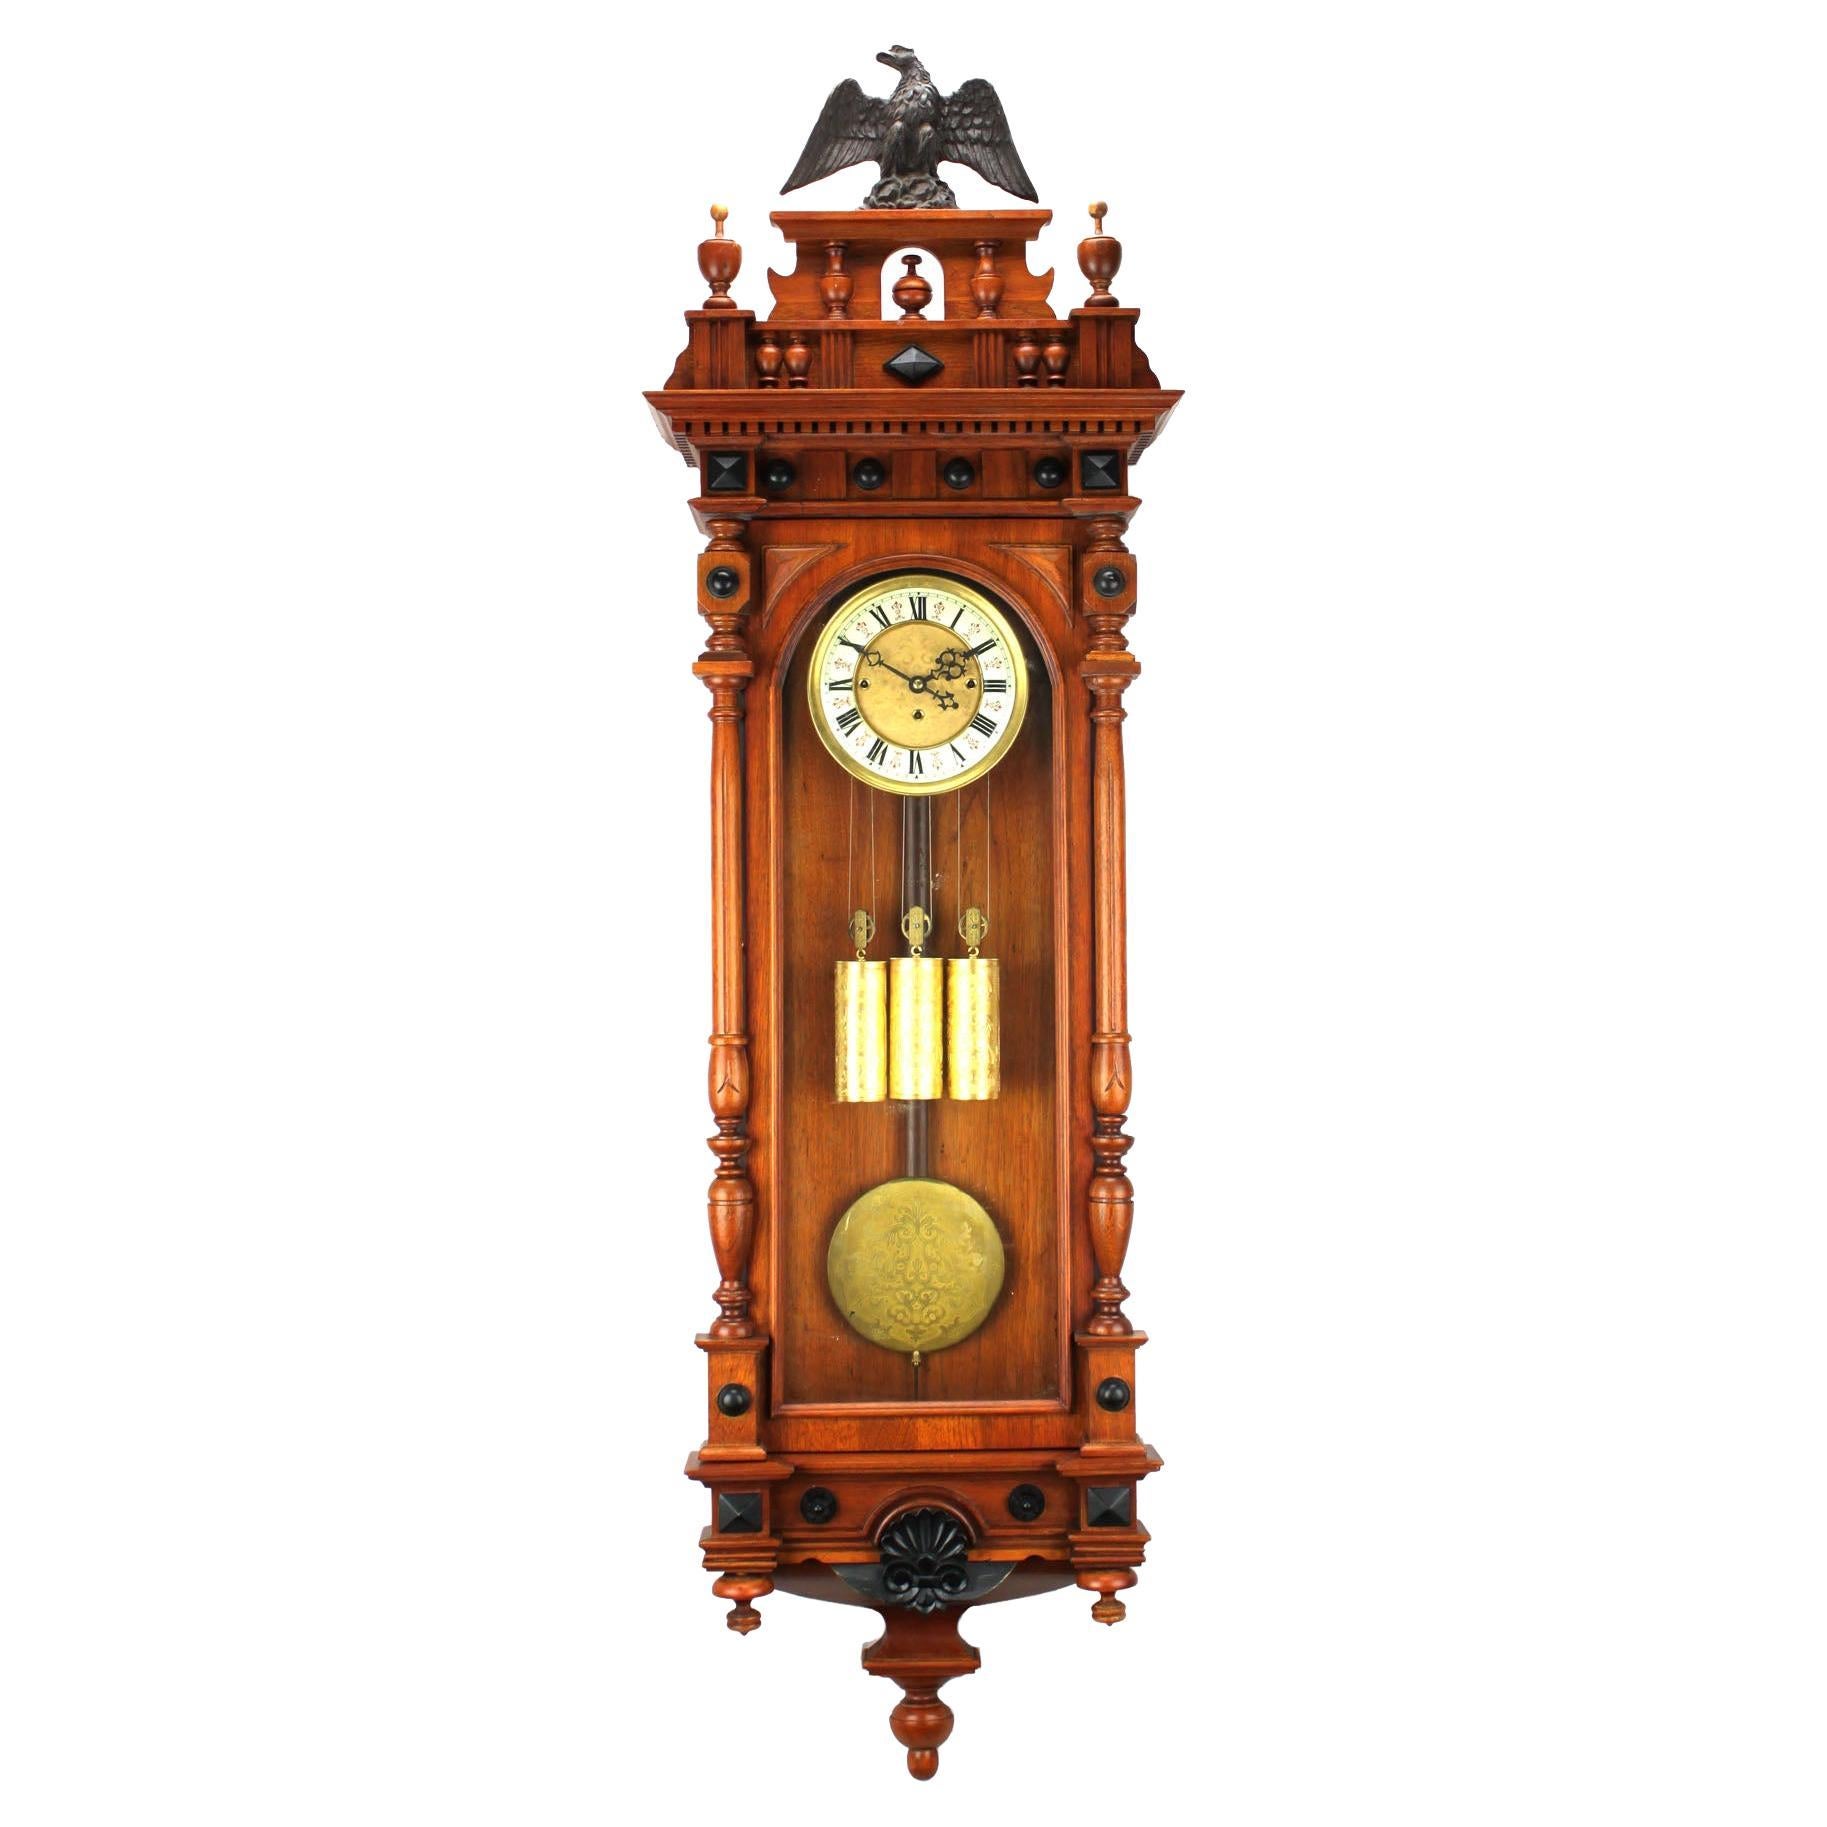 What is a regulator wall clock?